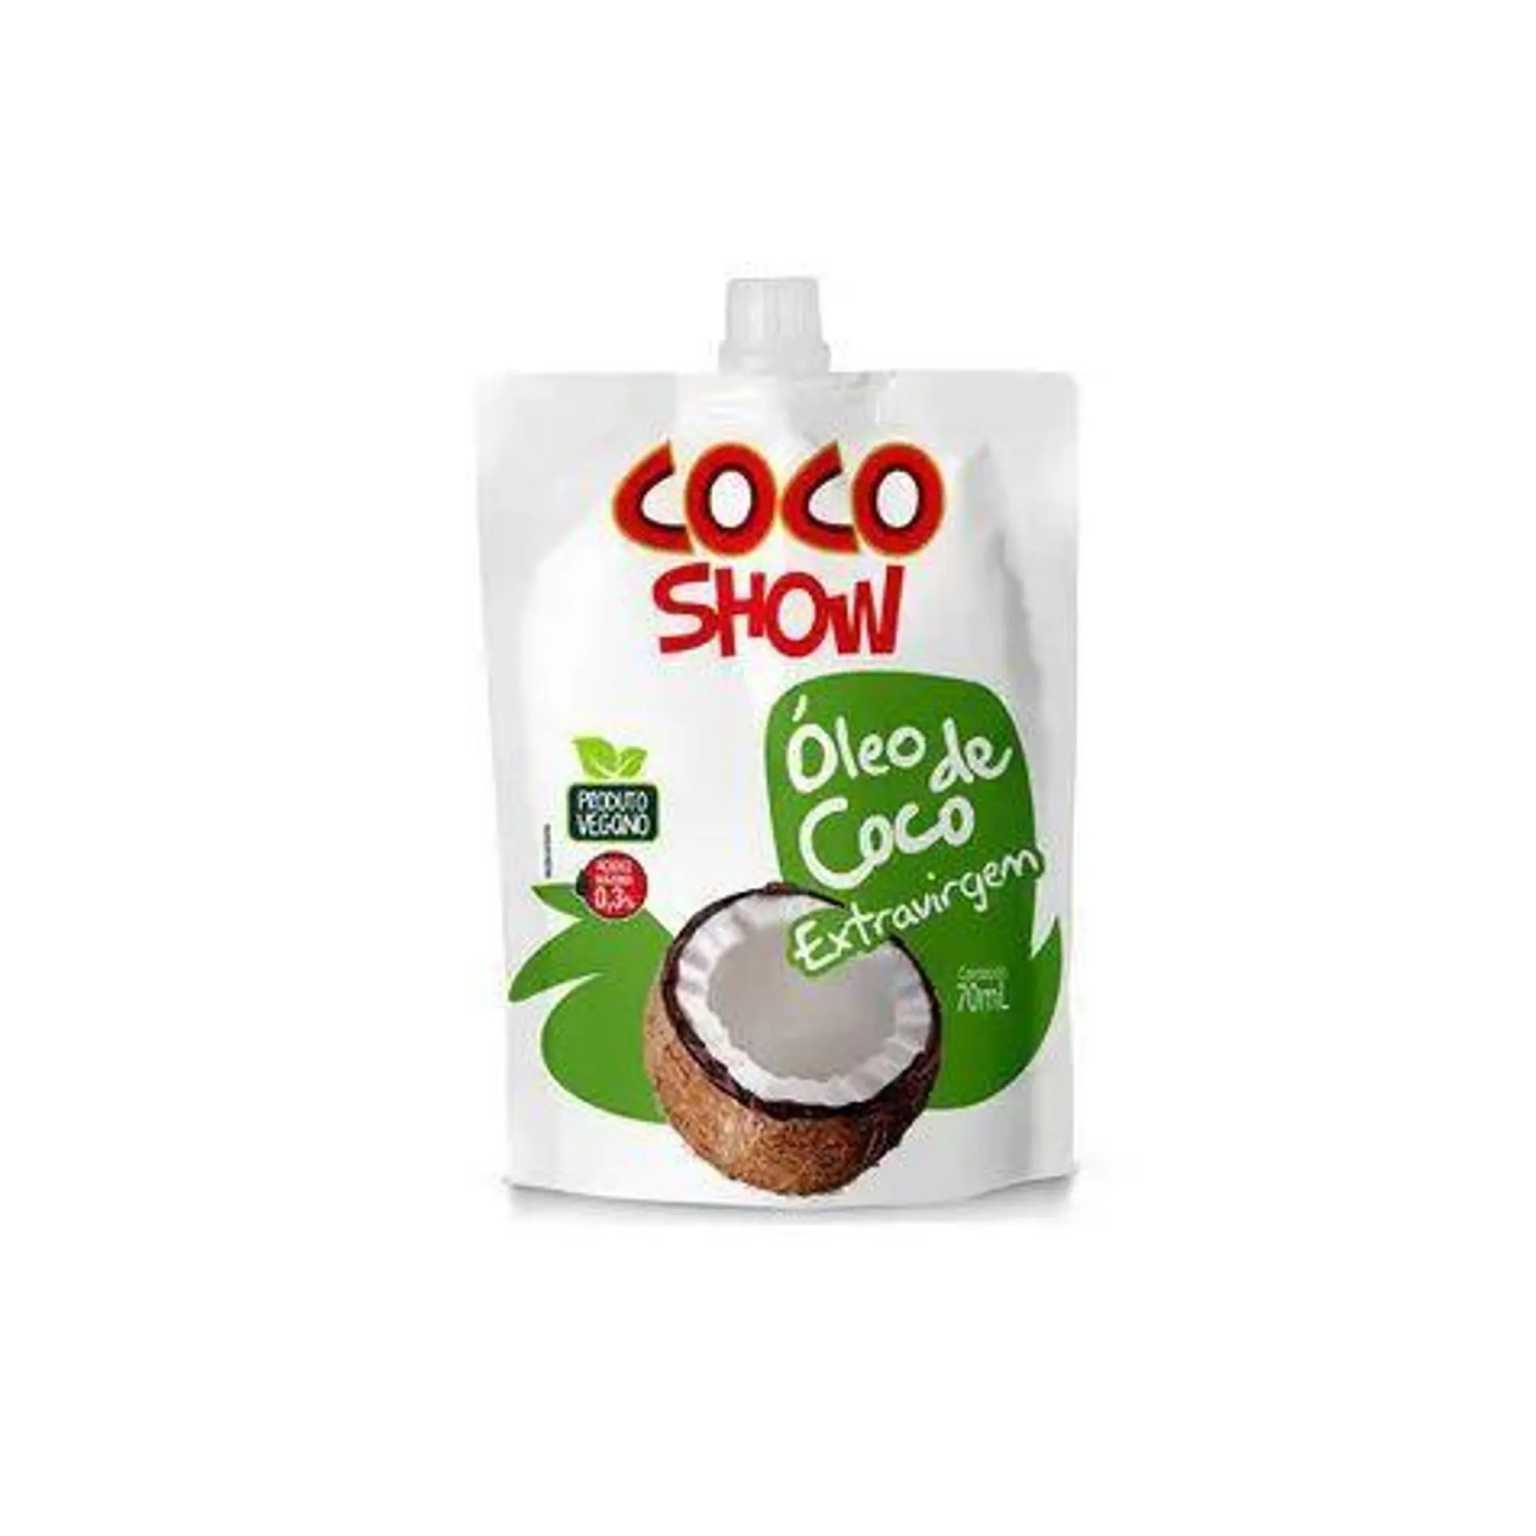 POUCH OLEO DE COCO EXTRAVIRGEM 70ML COCO SHOW